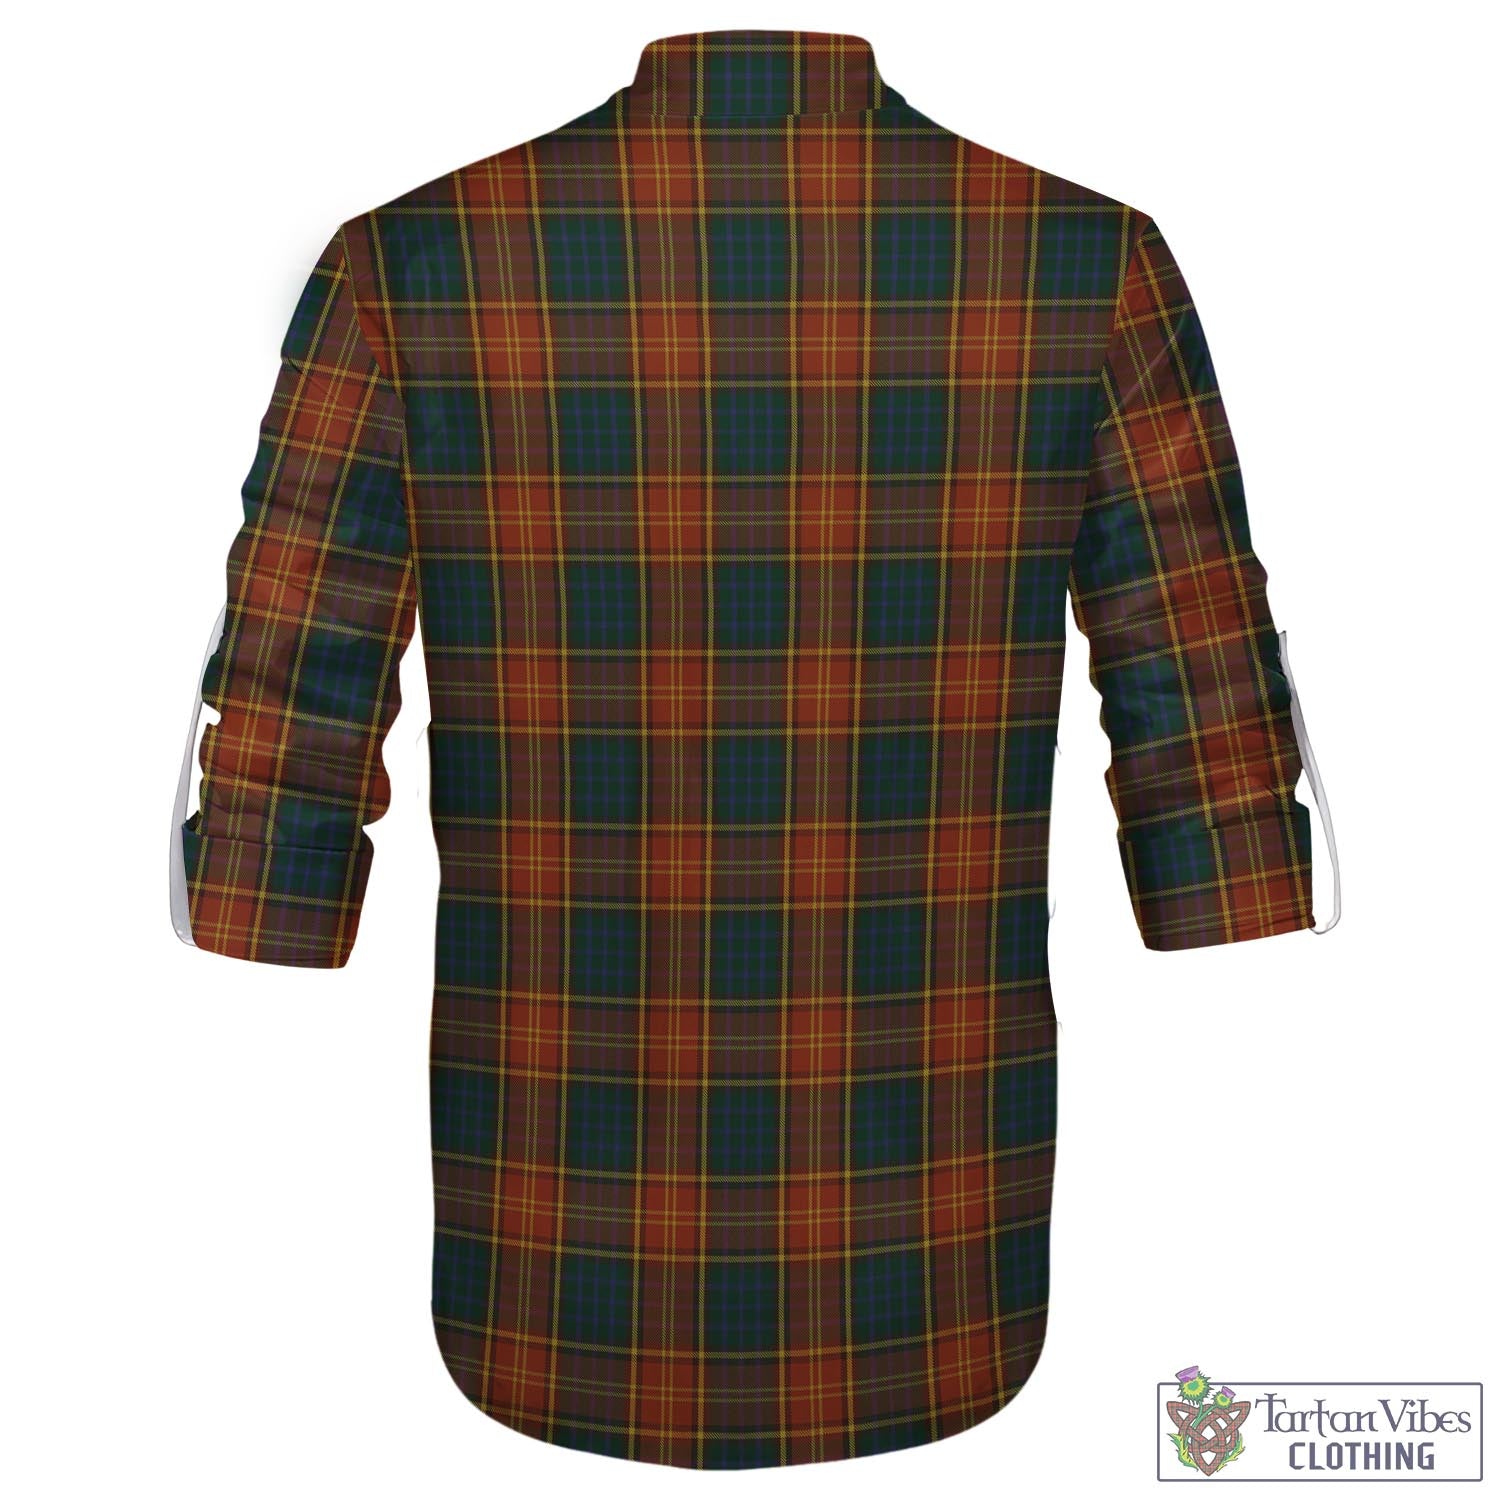 Tartan Vibes Clothing Roscommon County Ireland Tartan Men's Scottish Traditional Jacobite Ghillie Kilt Shirt